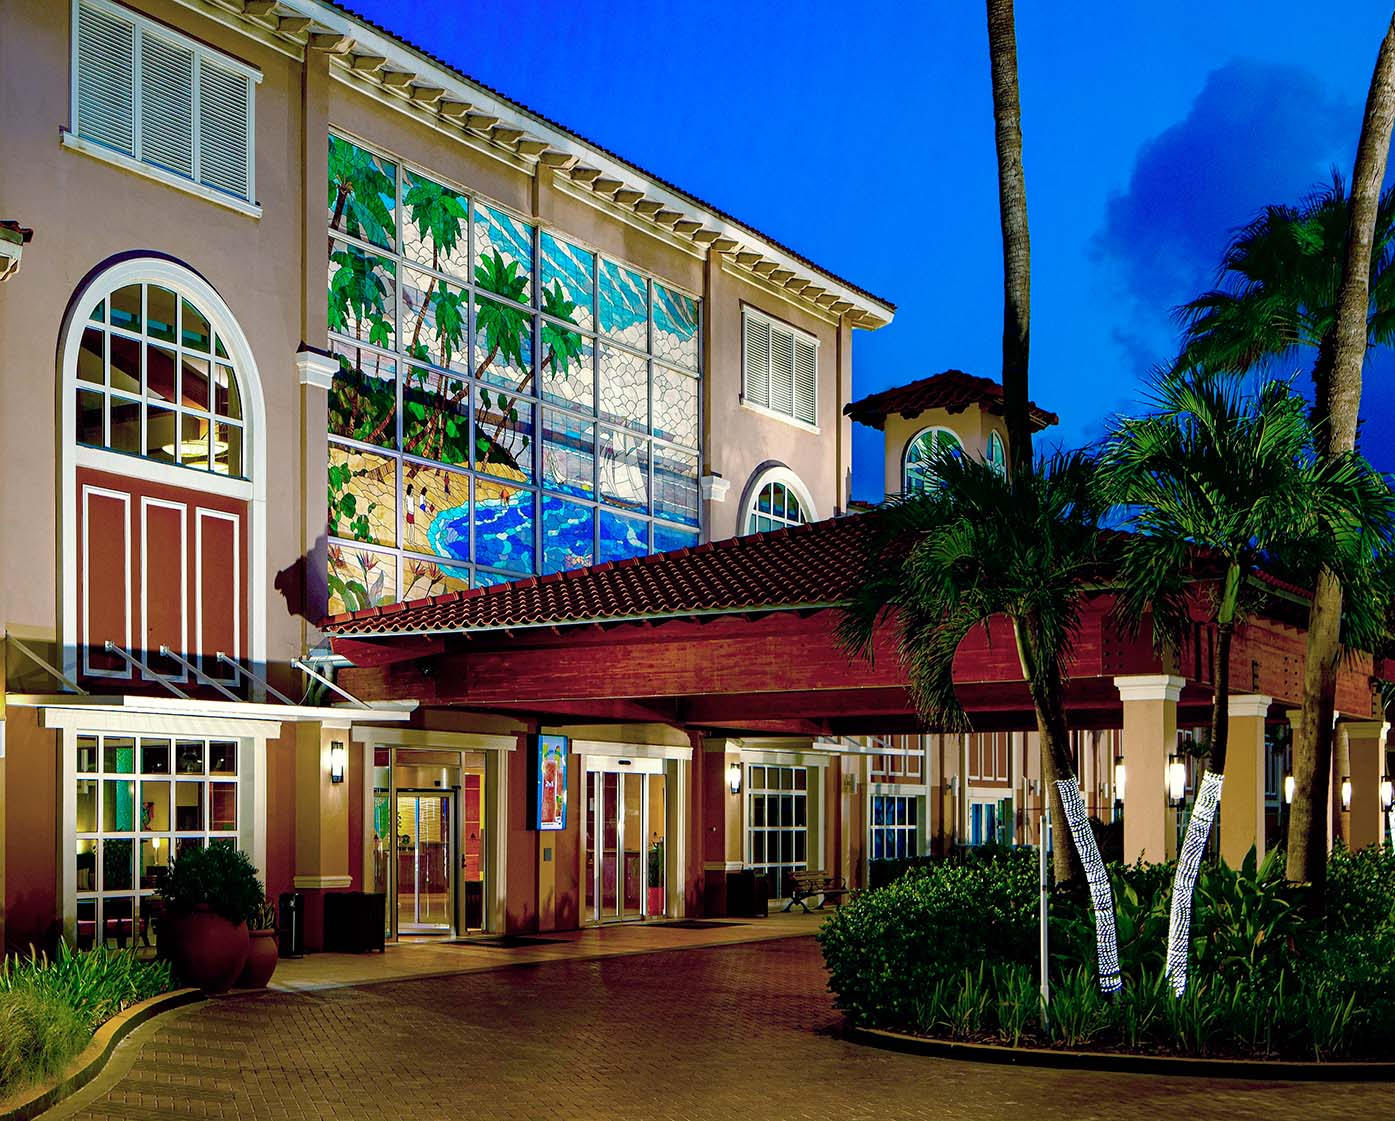 La Cabana Beach Resort & Casino